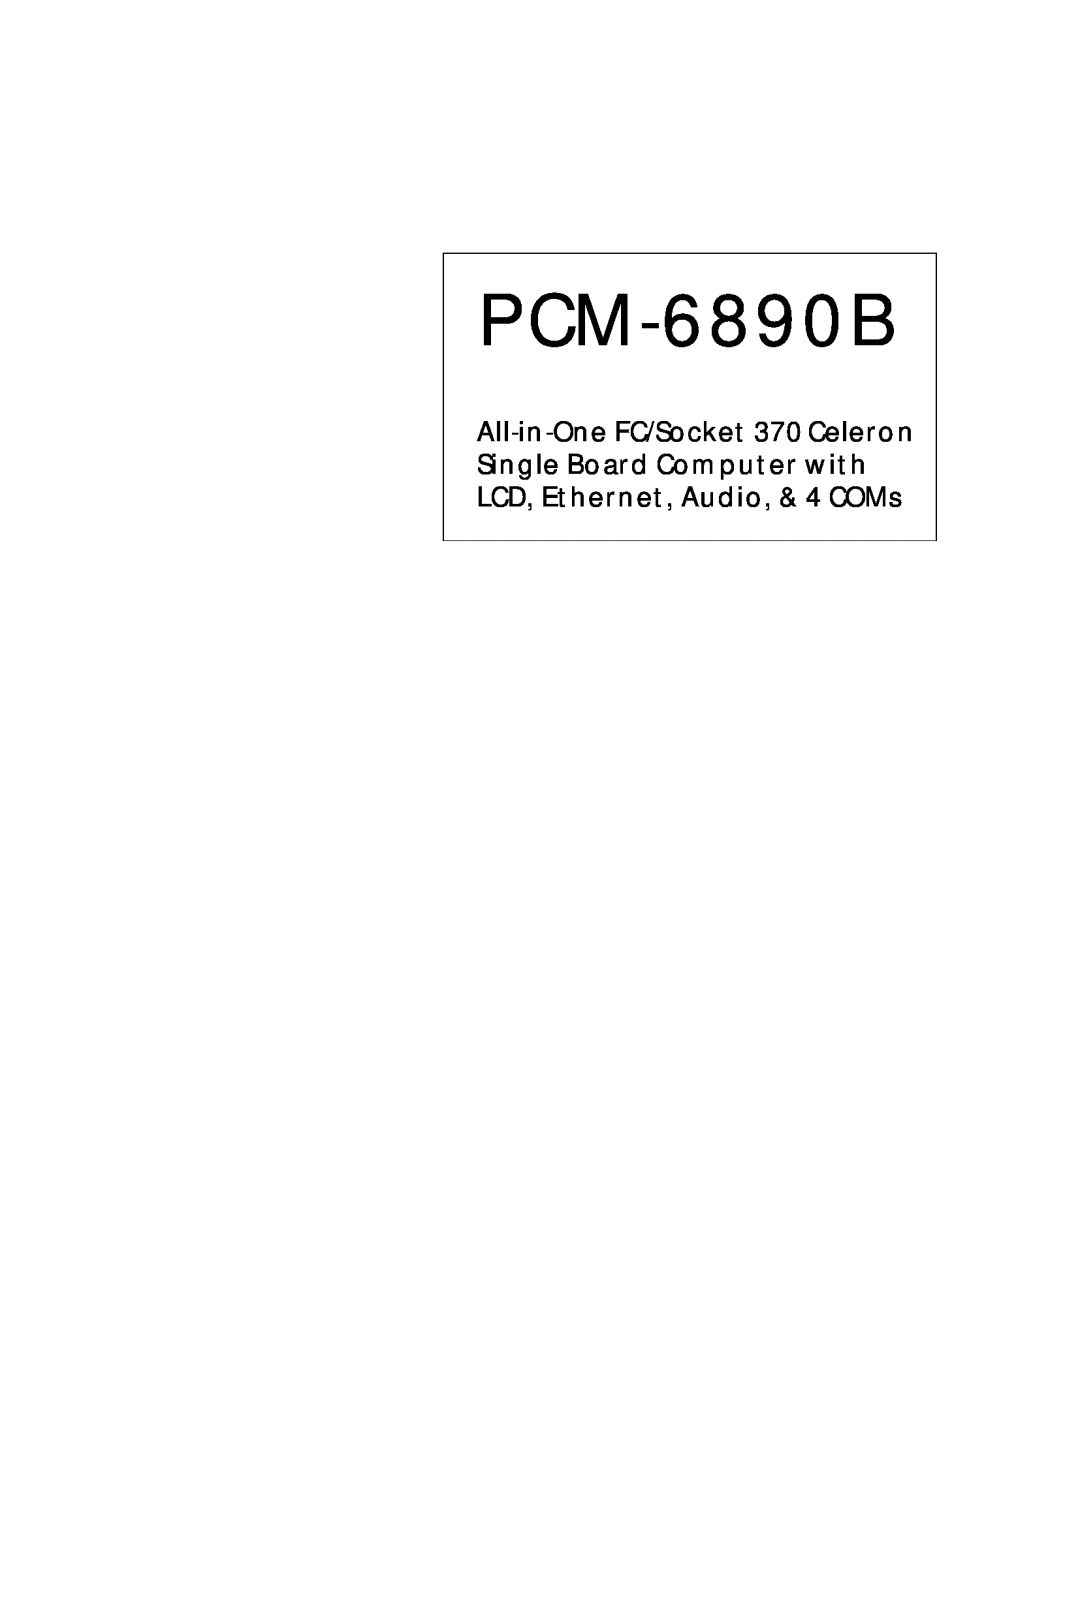 IBM All-in-One FC/Socket 370 Celeron manual PCM-6890B 